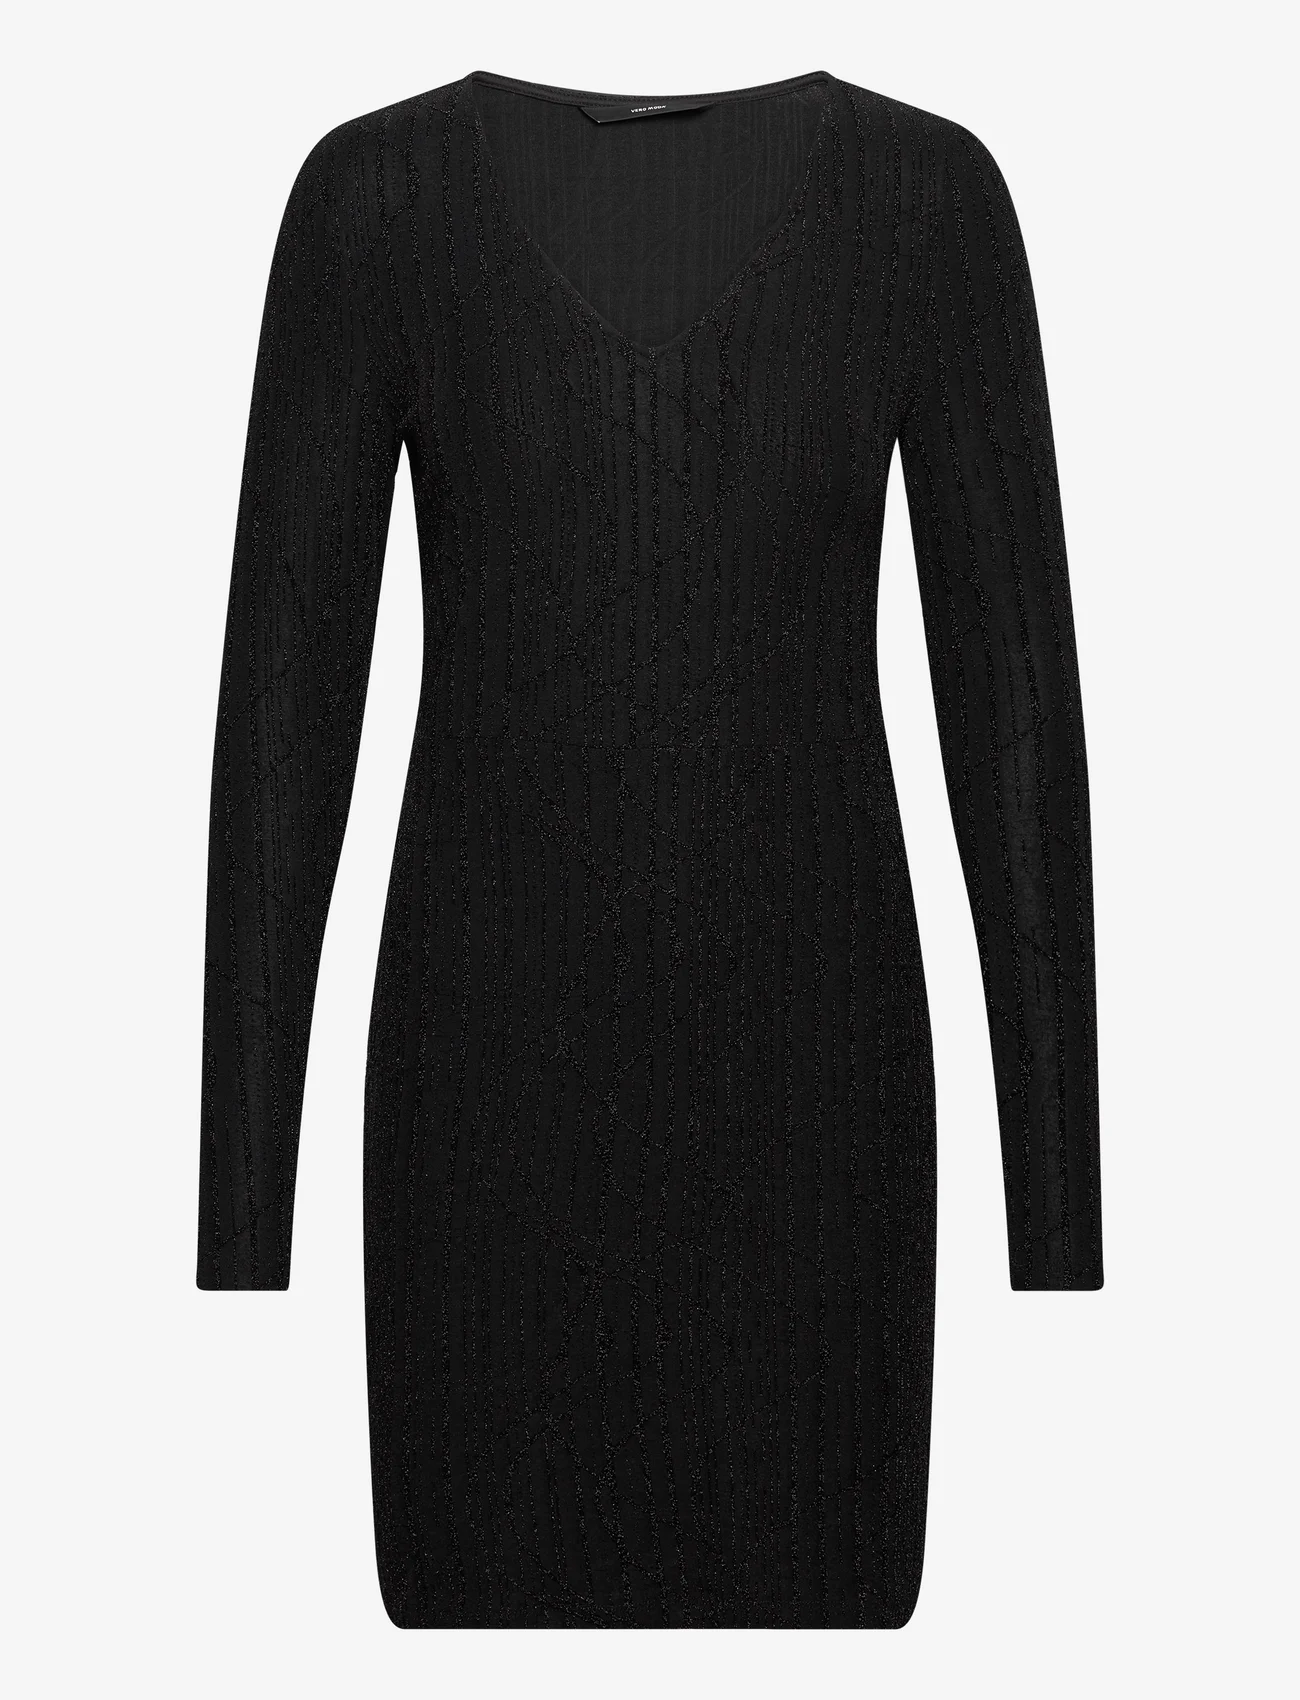 Vero Moda - VMKANZ SIBE LS SHORT DRESS JRS - bodycon dresses - black - 0